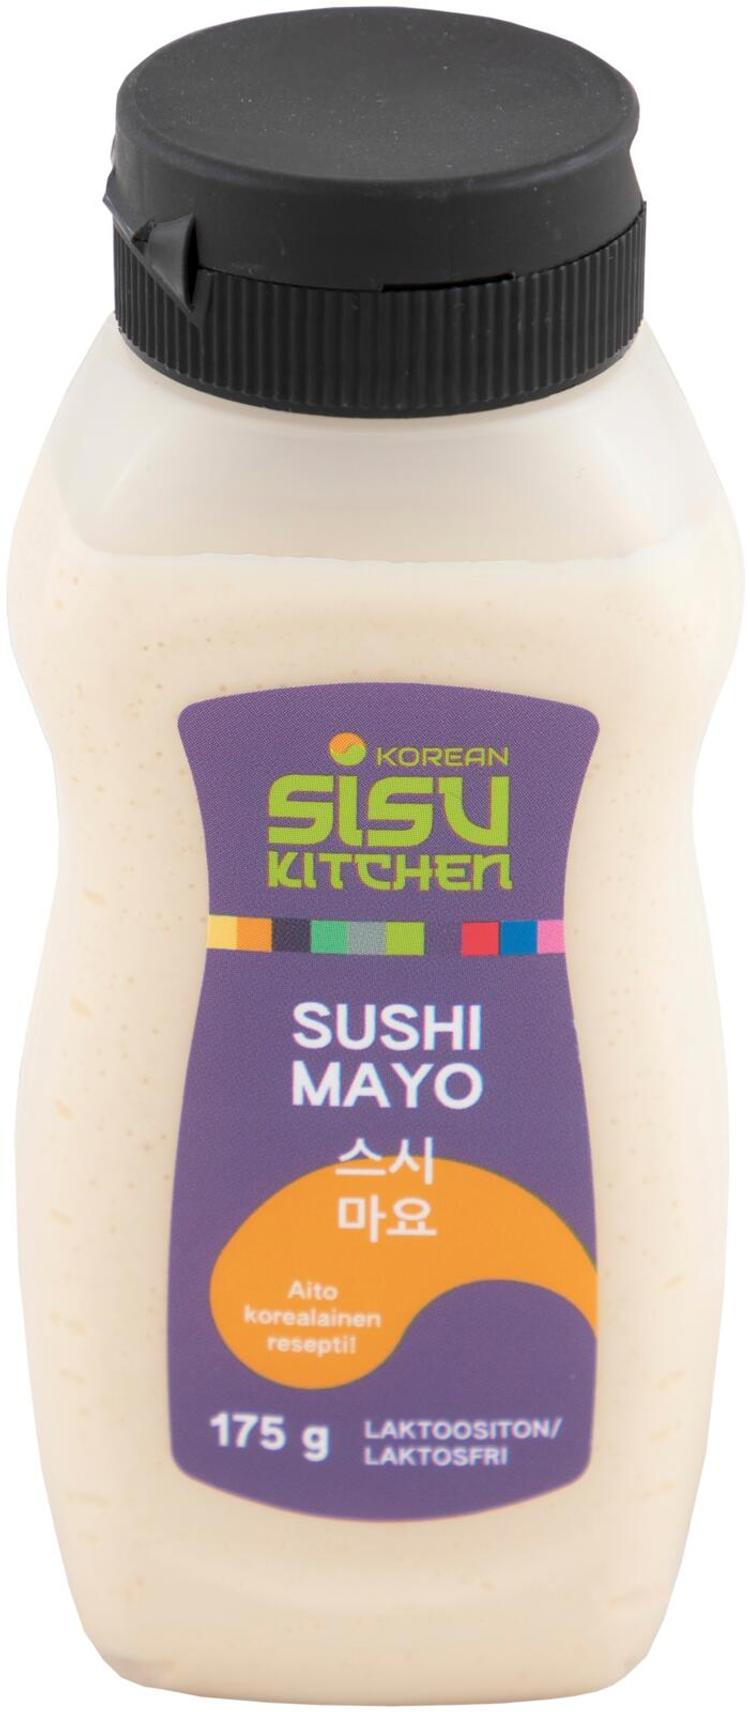 Sisu Kitchen Sushi Mayo majoneesi 175 g